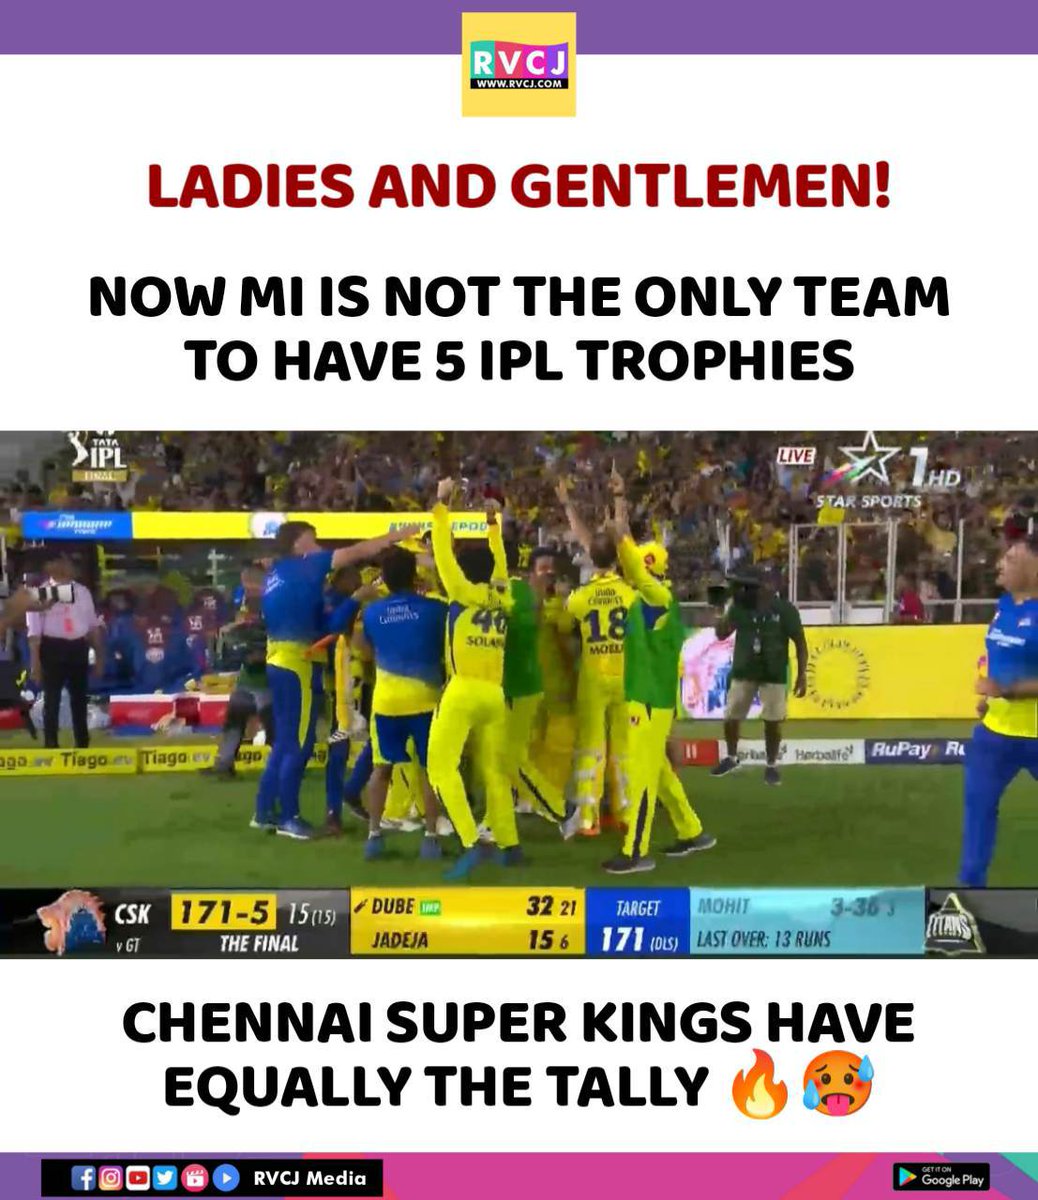 Chennai Super Kings 🔥💛. 

#chennaisuperkings #CSK #GTvsCSK #IPL #IPLFinal #IndianPremierLeague #IPL2O23 #rvcjinsta